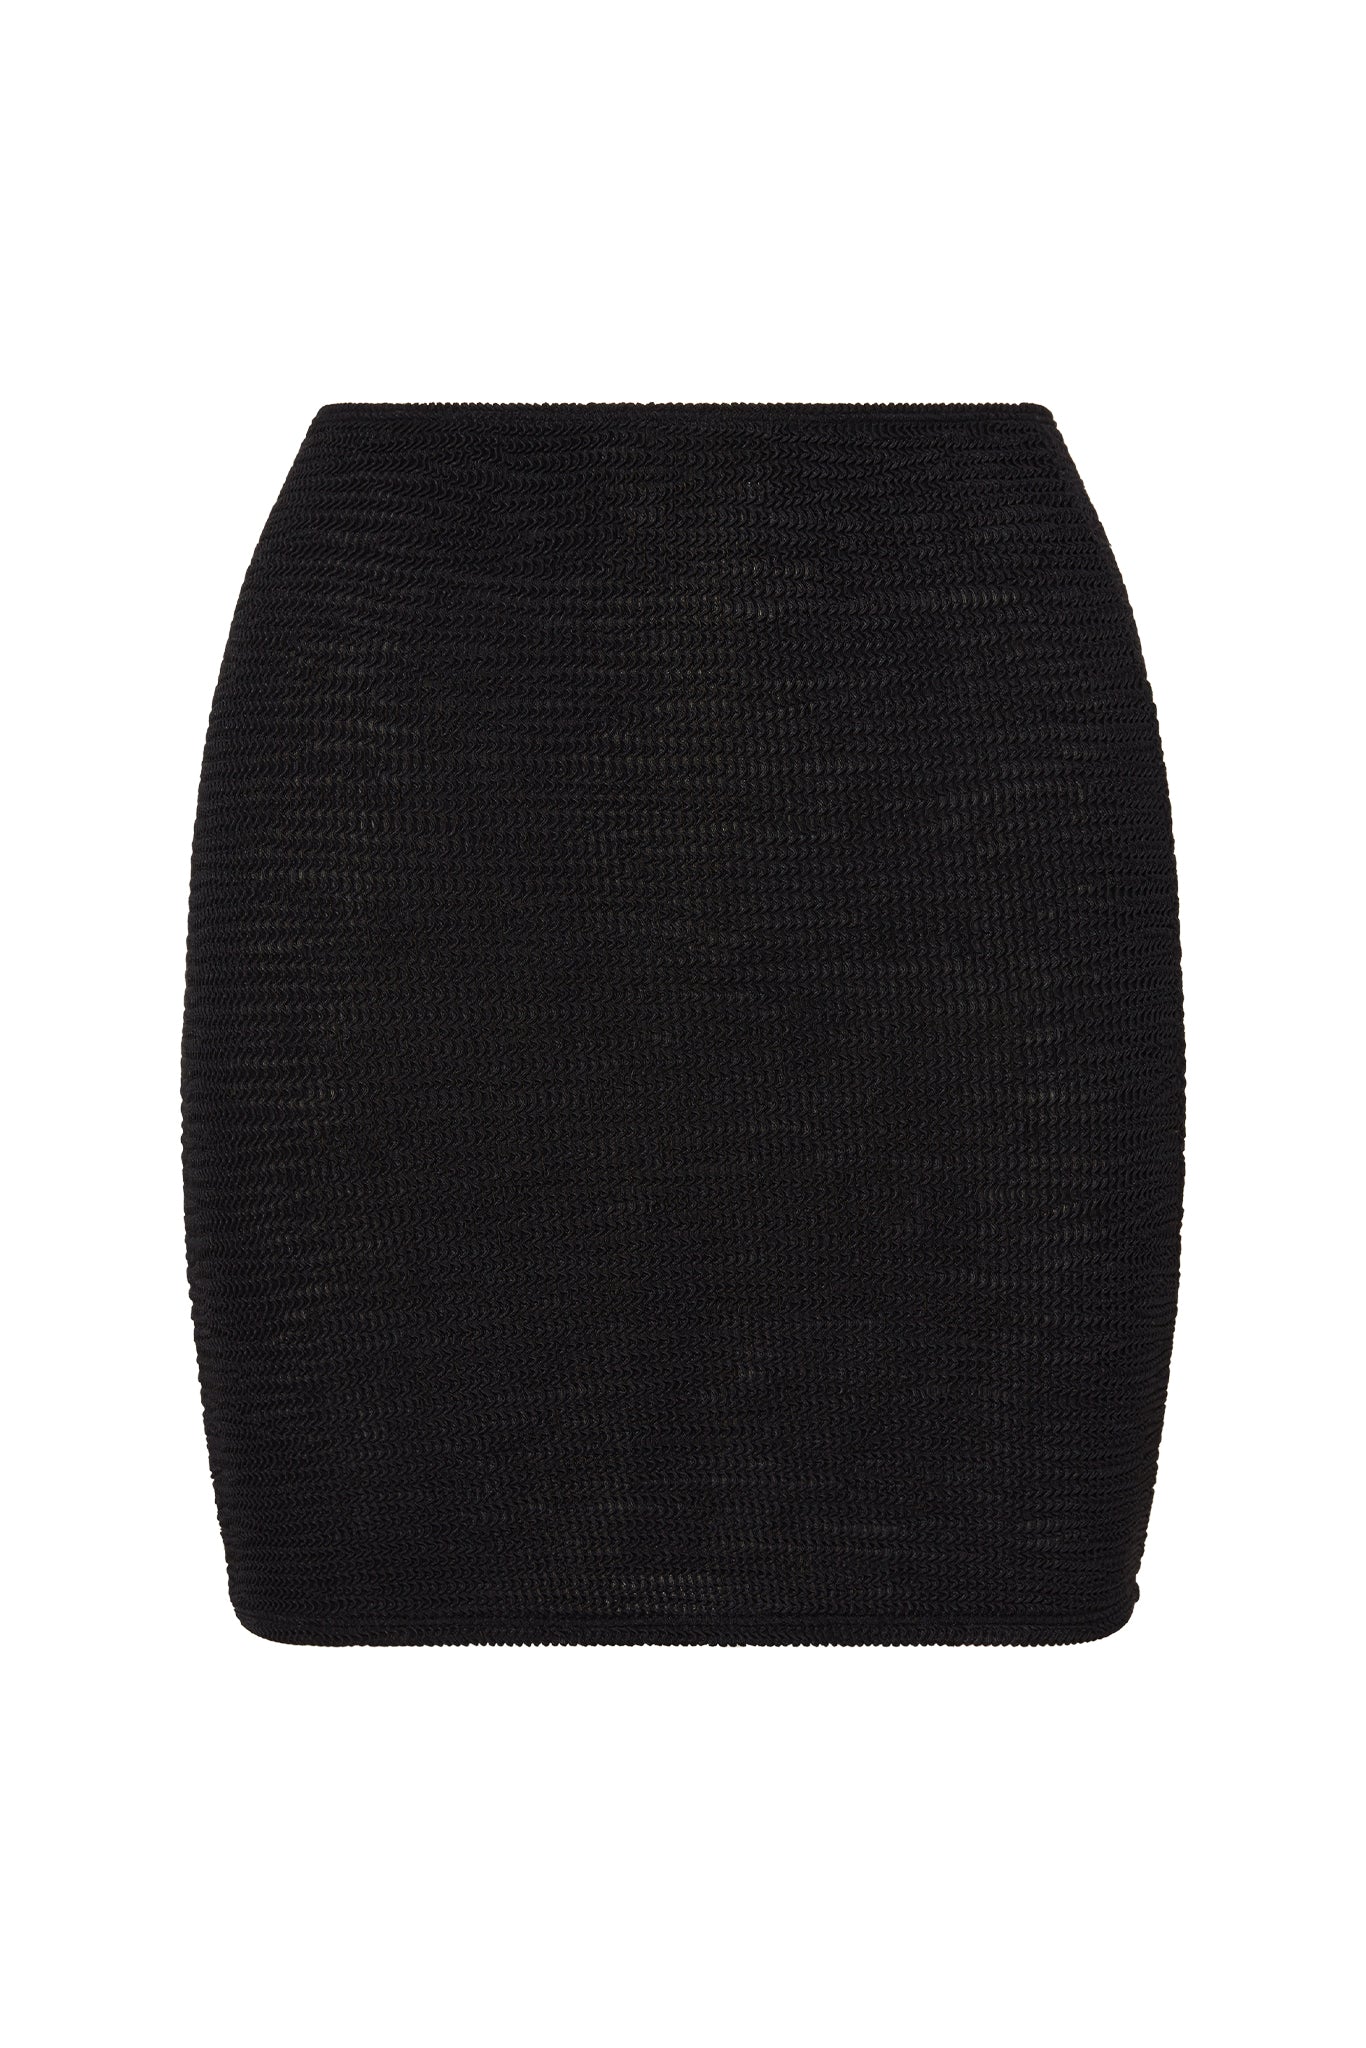 Cayman Skirt - Black Crinkle – Monday Swimwear